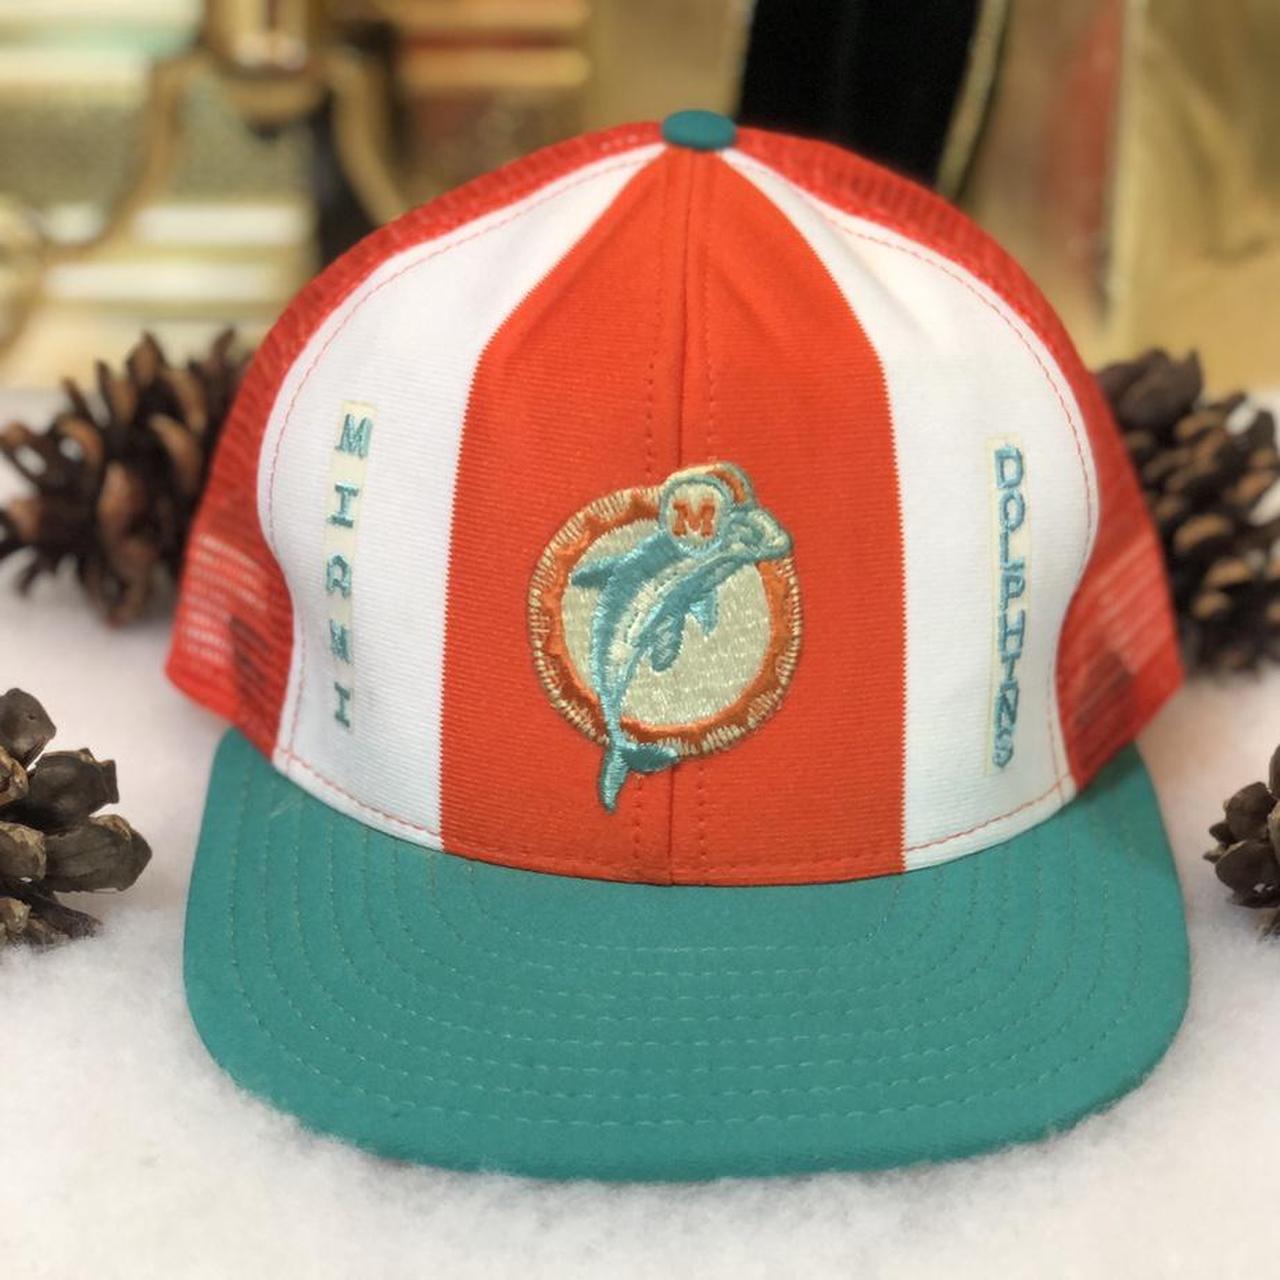 Vintage NFL Miami Dolphins AJD Trucker Hat